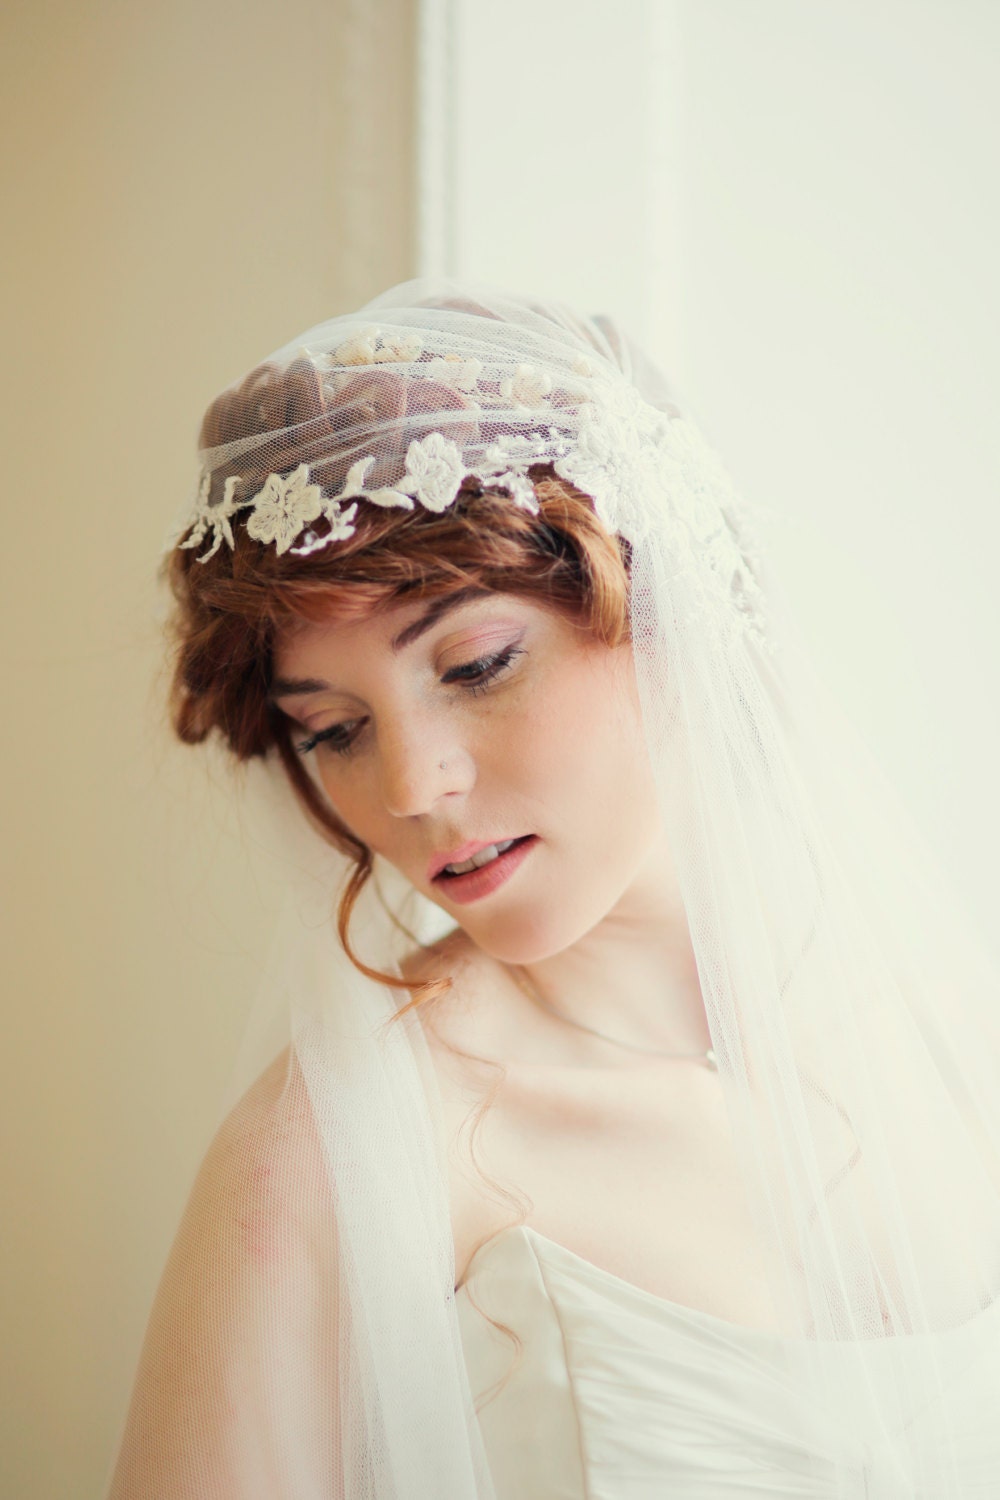 Handmade, bespoke Wedding veil, Cornwall, UK